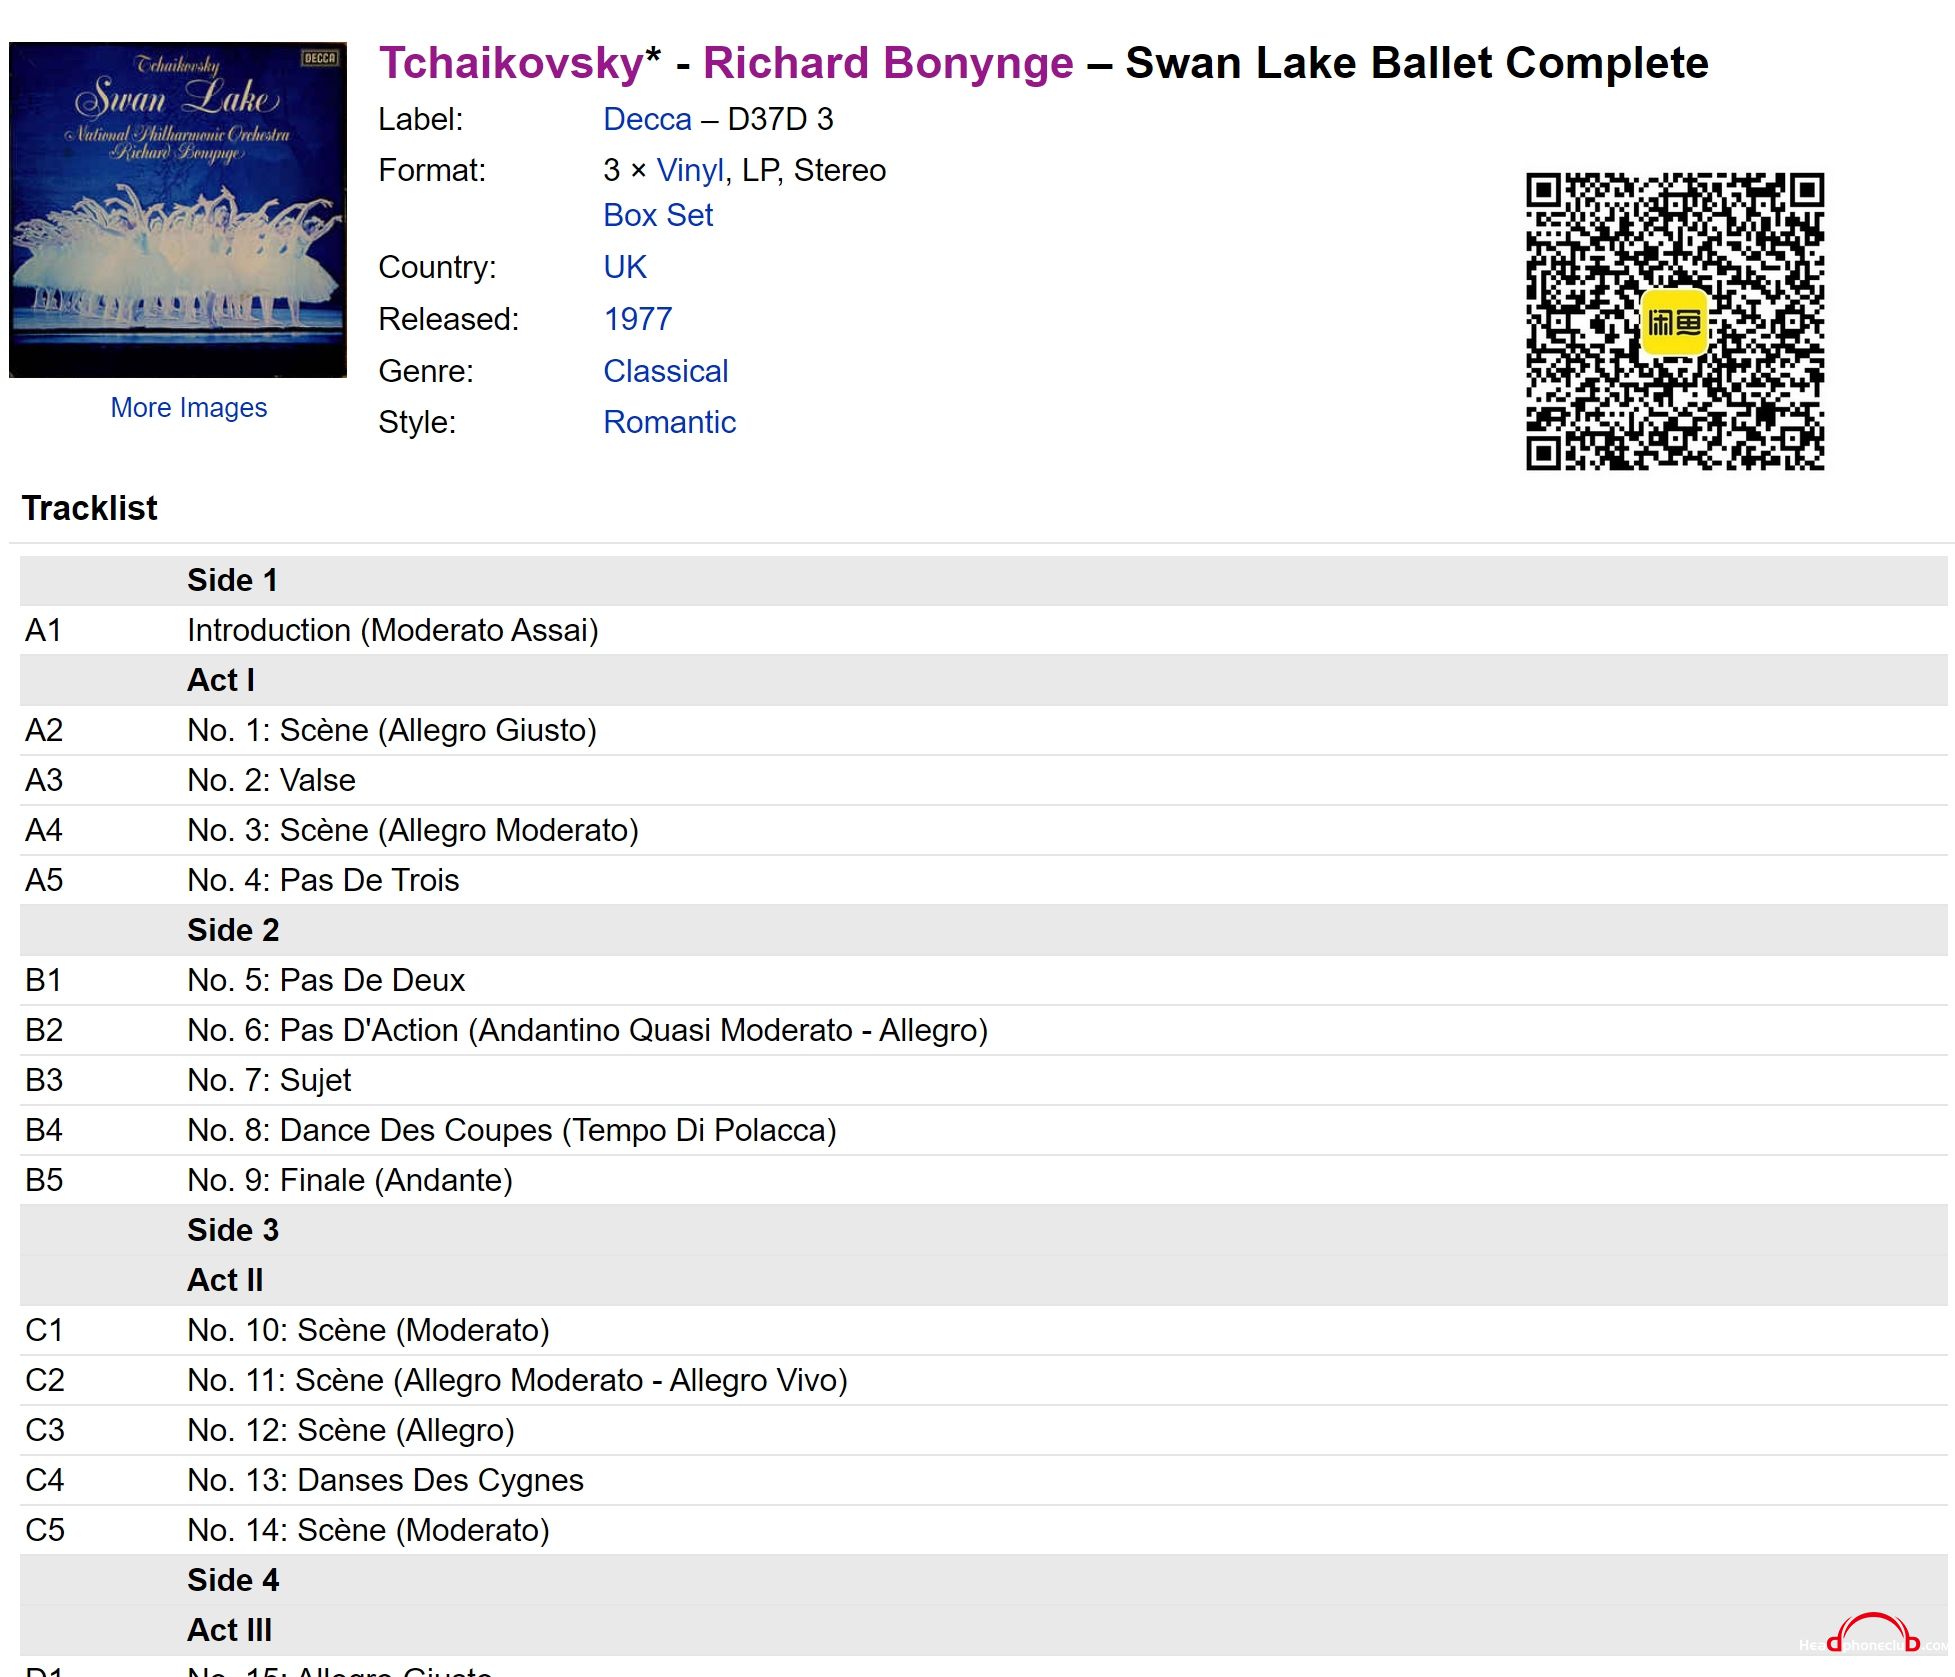 Richard Bonynge C Tchaikovsky - Swan Lake Ballet Complete.jpg